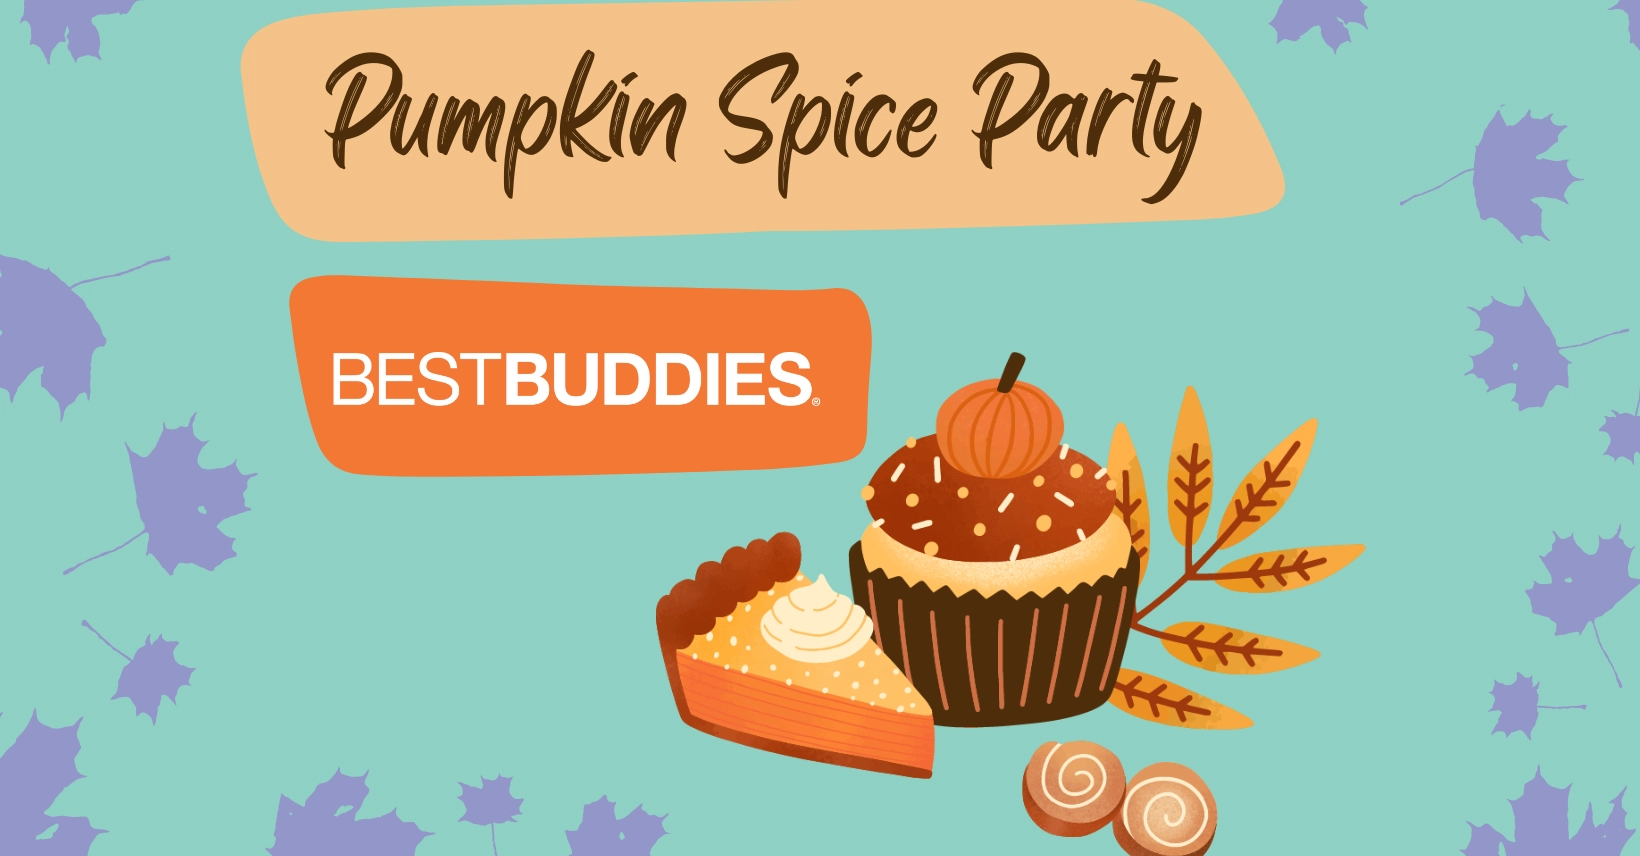 Pumpkin Spice Party graphic